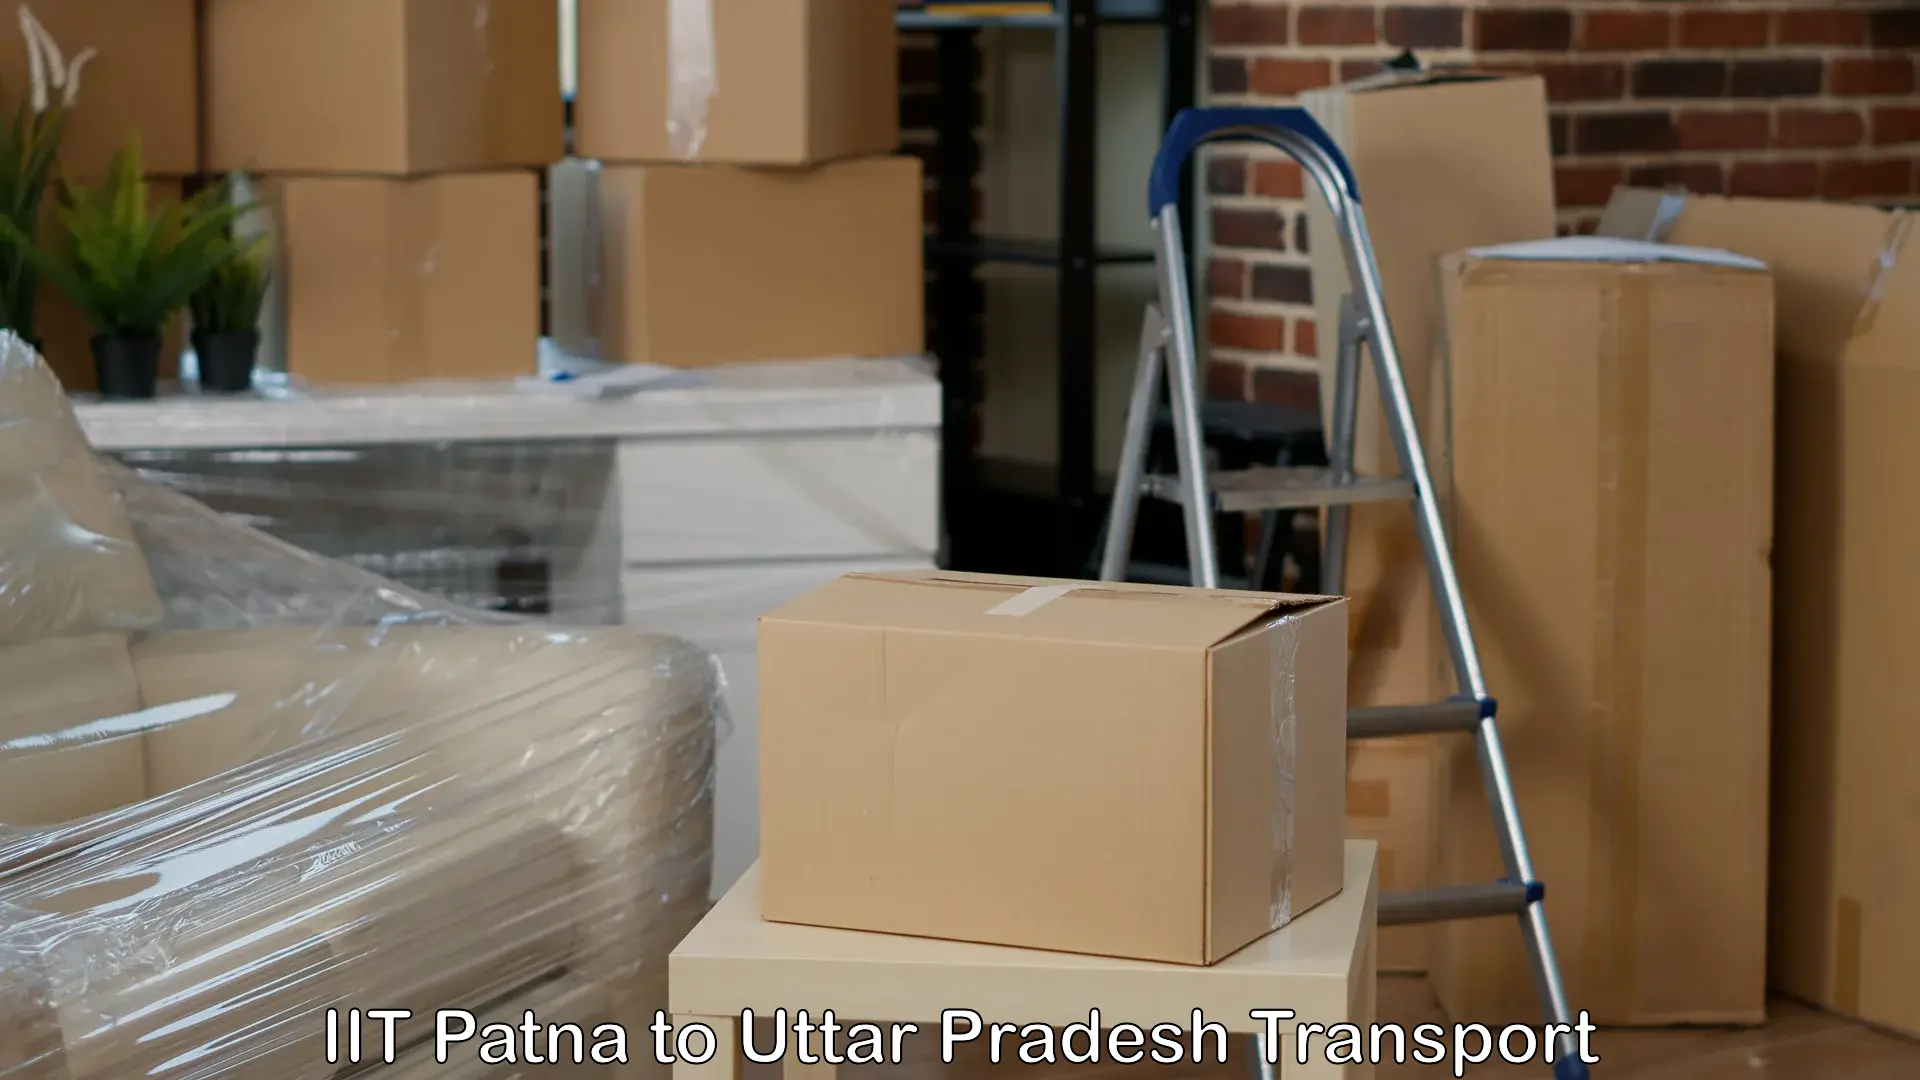 Container transport service in IIT Patna to Varanasi